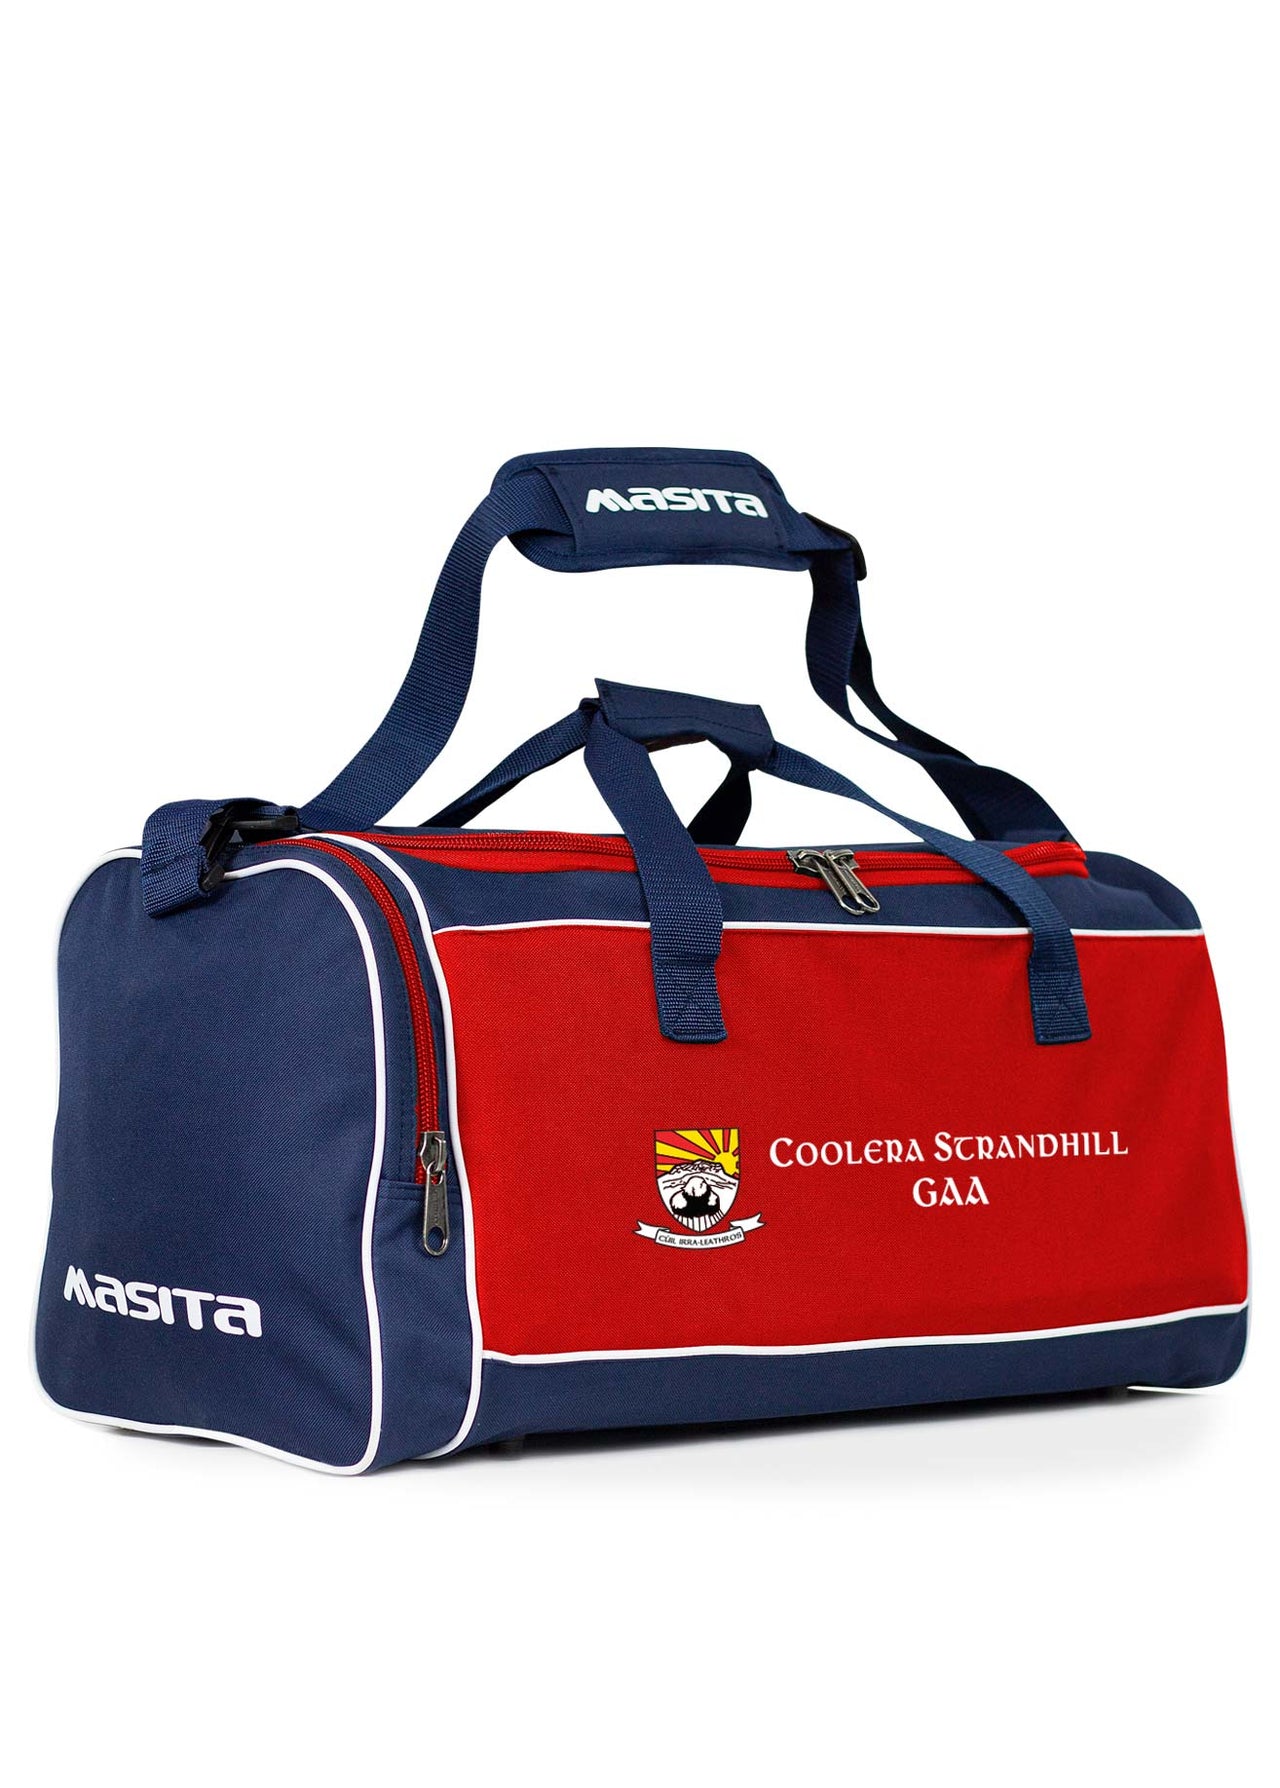 Coolera Strandhill GAAl Forza Bag Medium